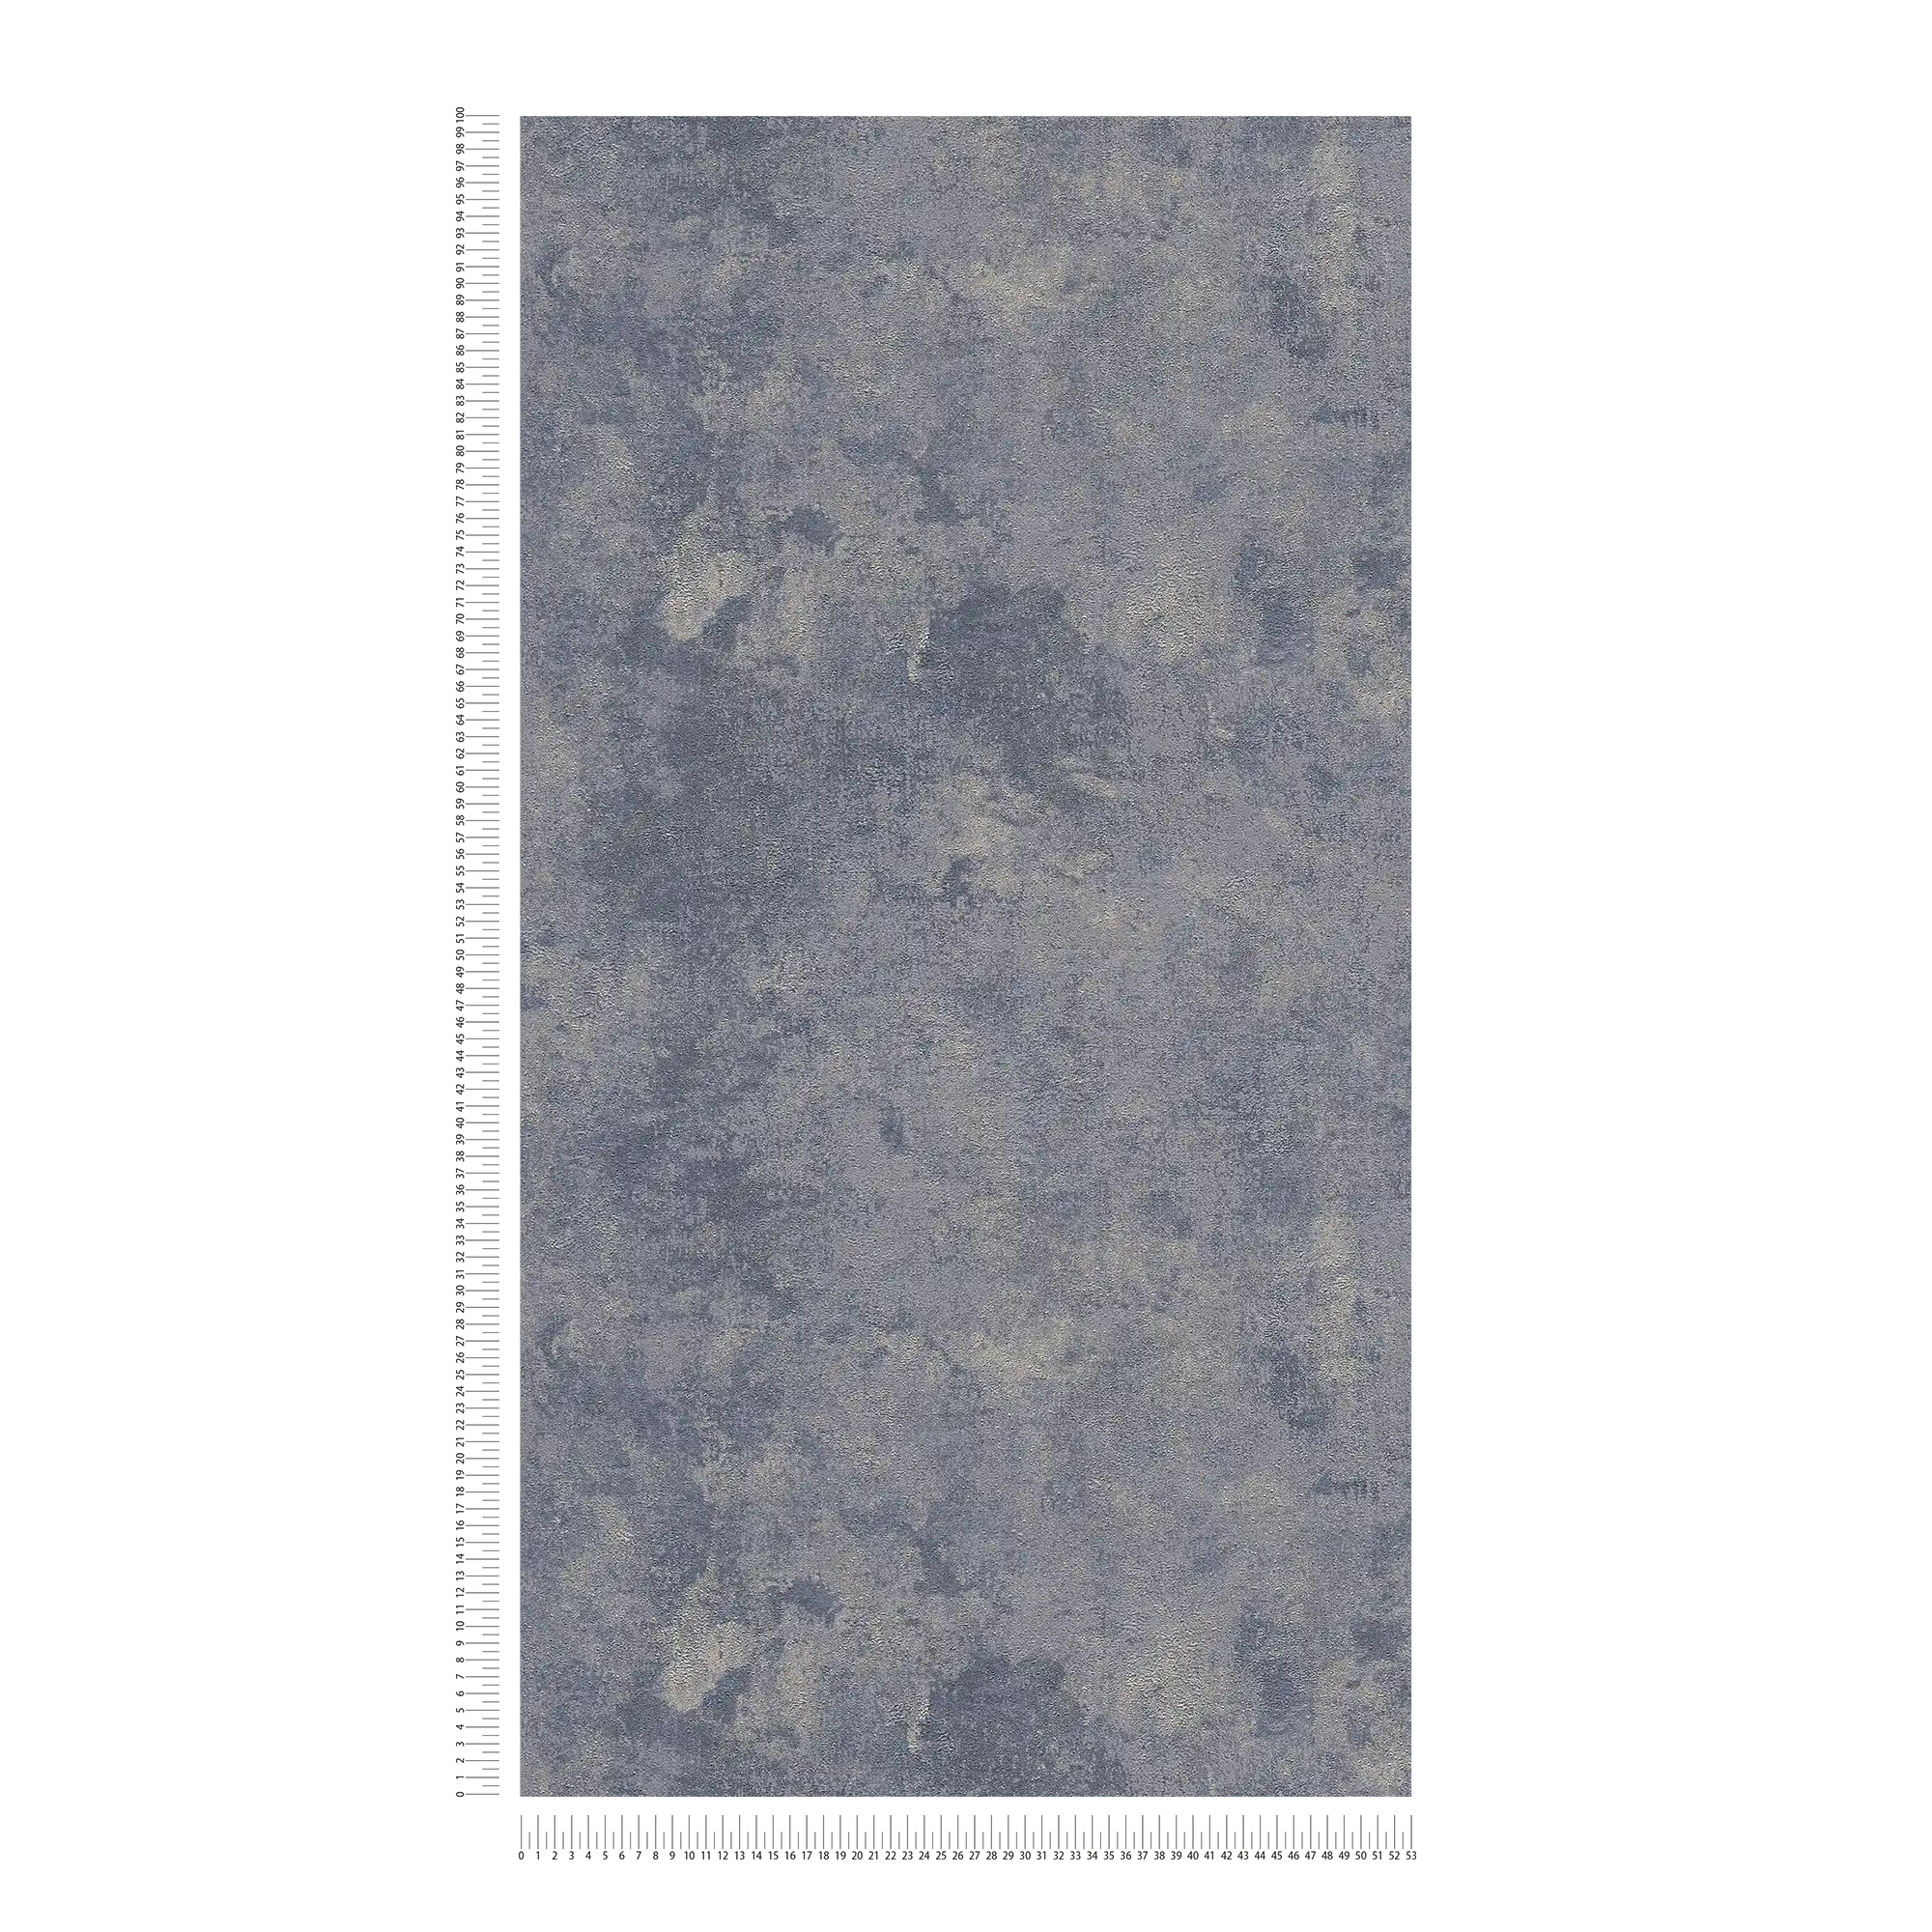             Tapete raue Struktur & Glanz-Effekt – Blau, Silber, Grau
        